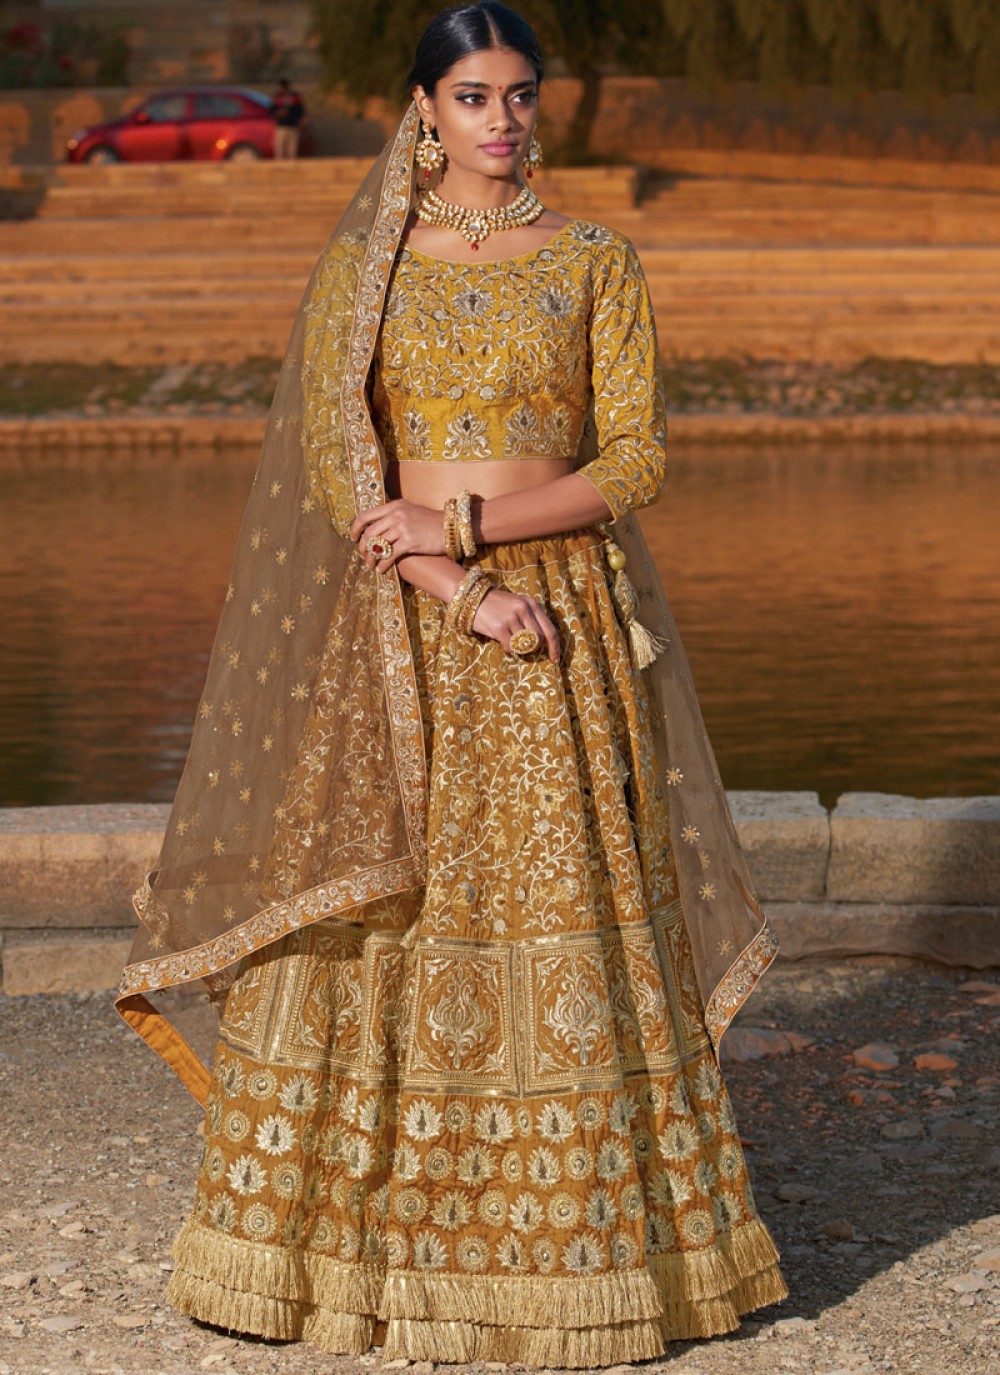 lehenga blouse design in golden color and mirror work | Indian fashion  dresses, Indian fashion, Lehenga designs